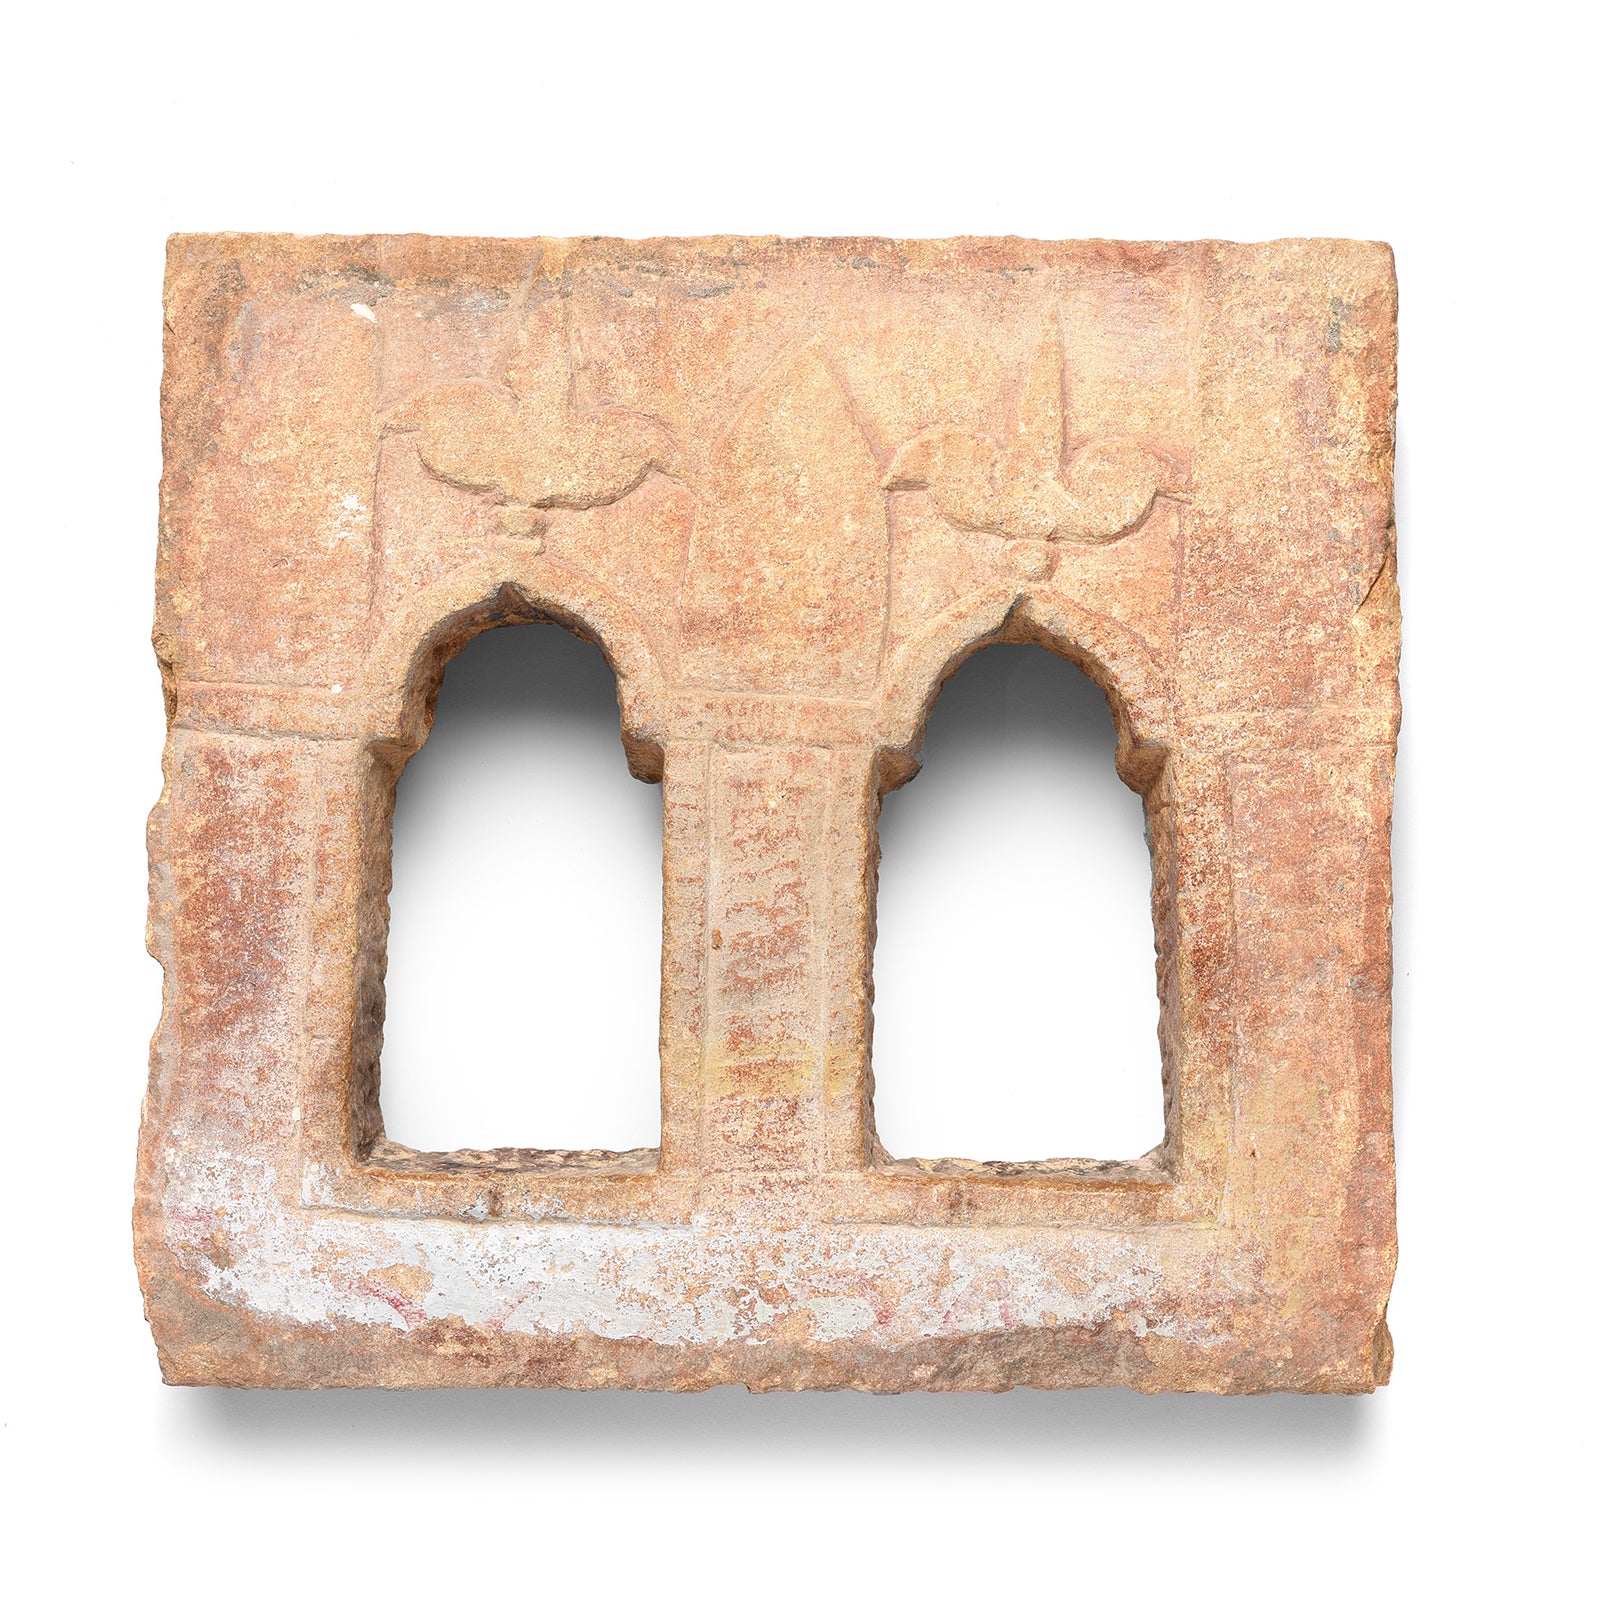 Antique Old 2 Way Stone Lamp Niche From Jaisalmer - 19th Century | Indigo Antiques